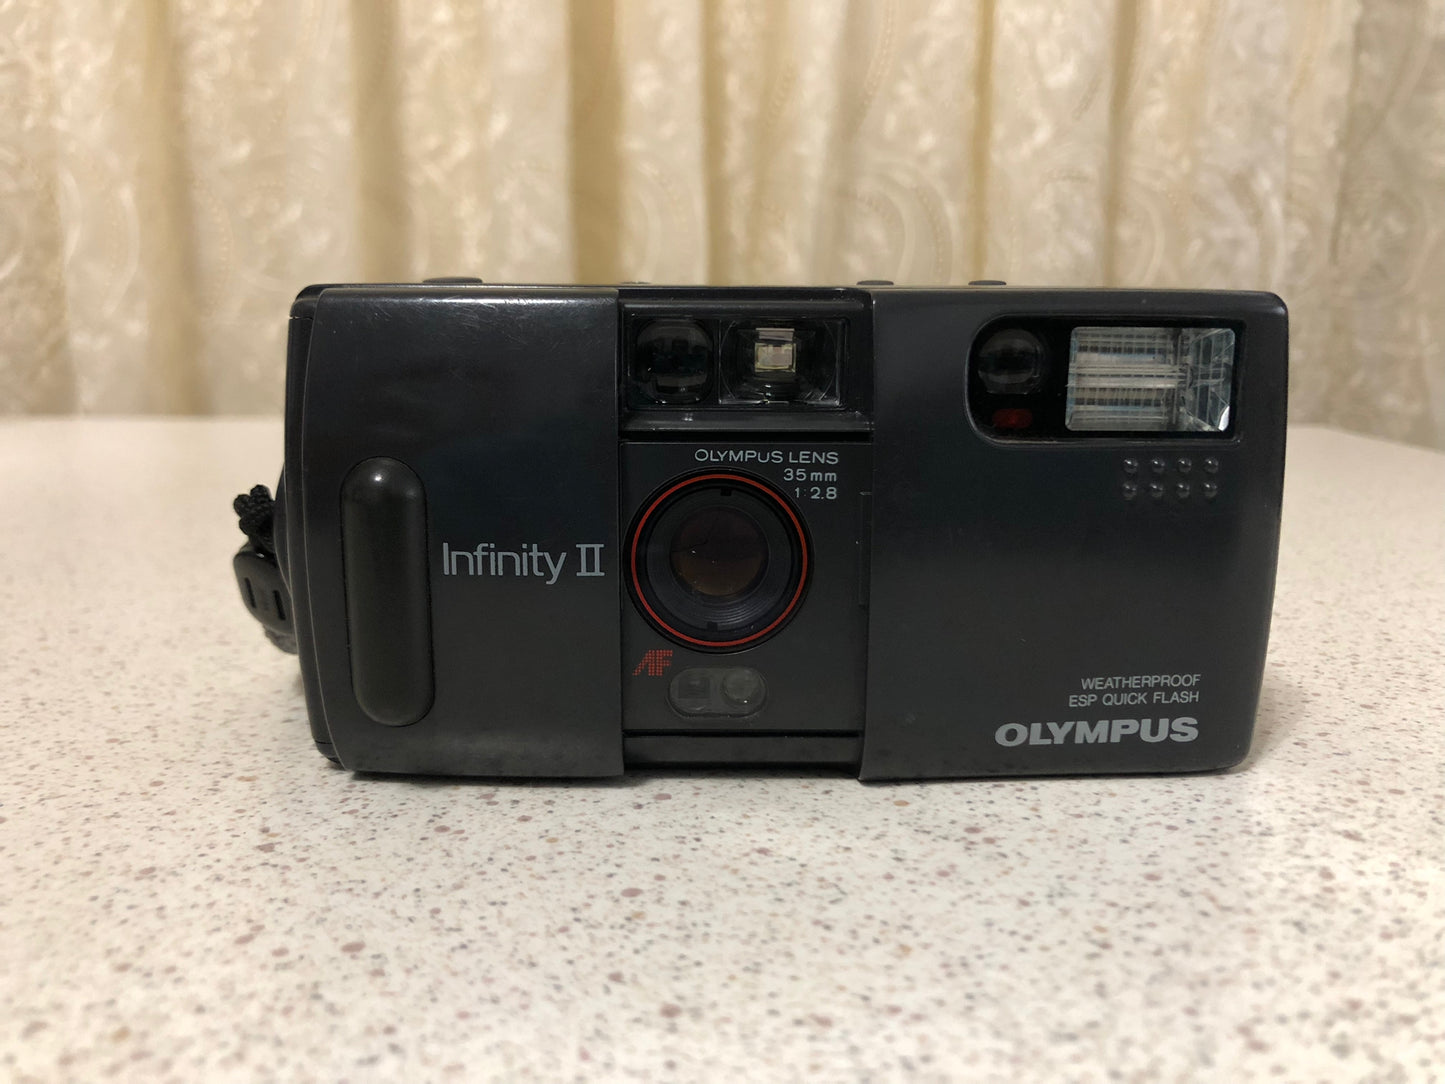 Olympus Infinity II 35mm Point & Shoot Film Camera